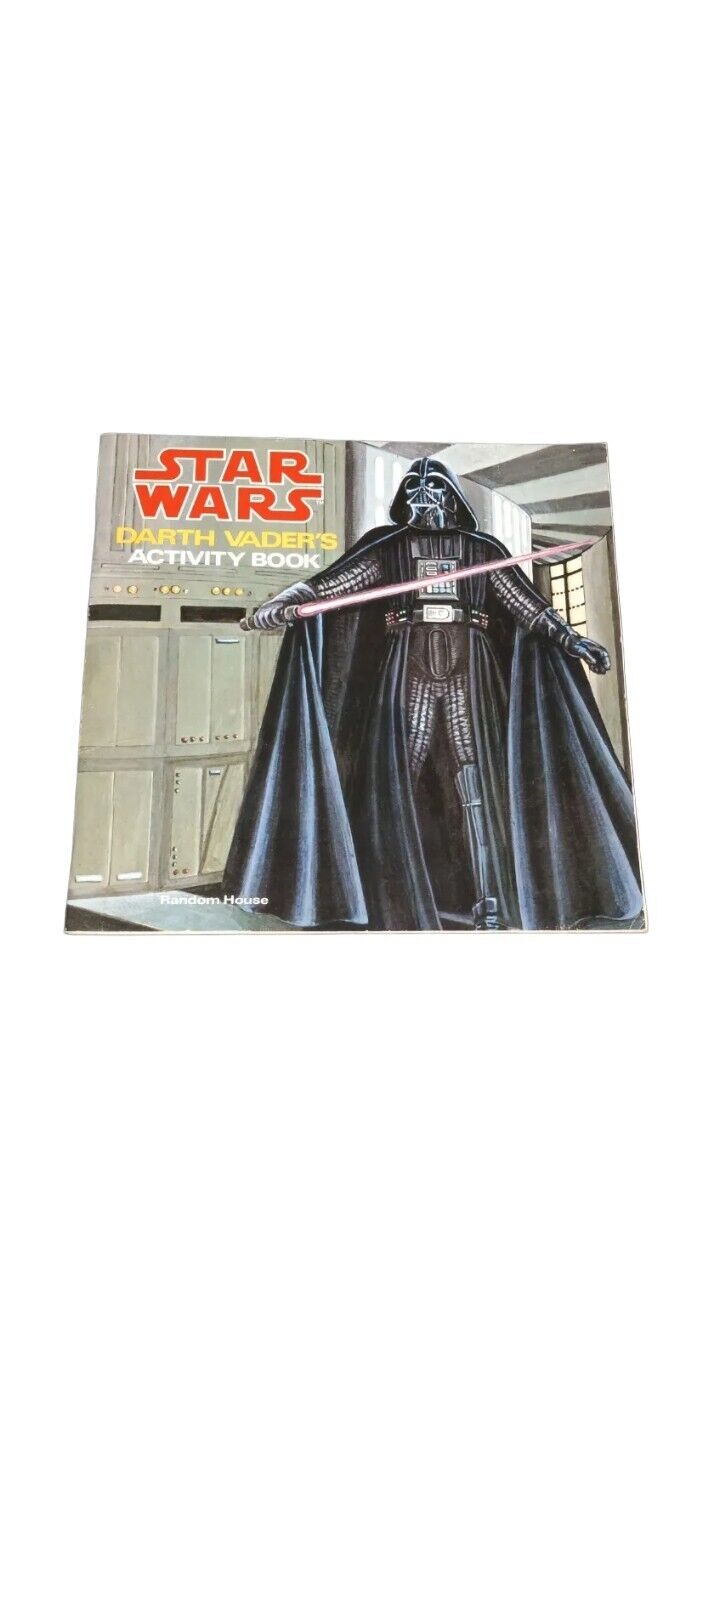 Vintage 1979 Star Wars Darth Vader's Activity Book First Print UNMARKED NEW COND